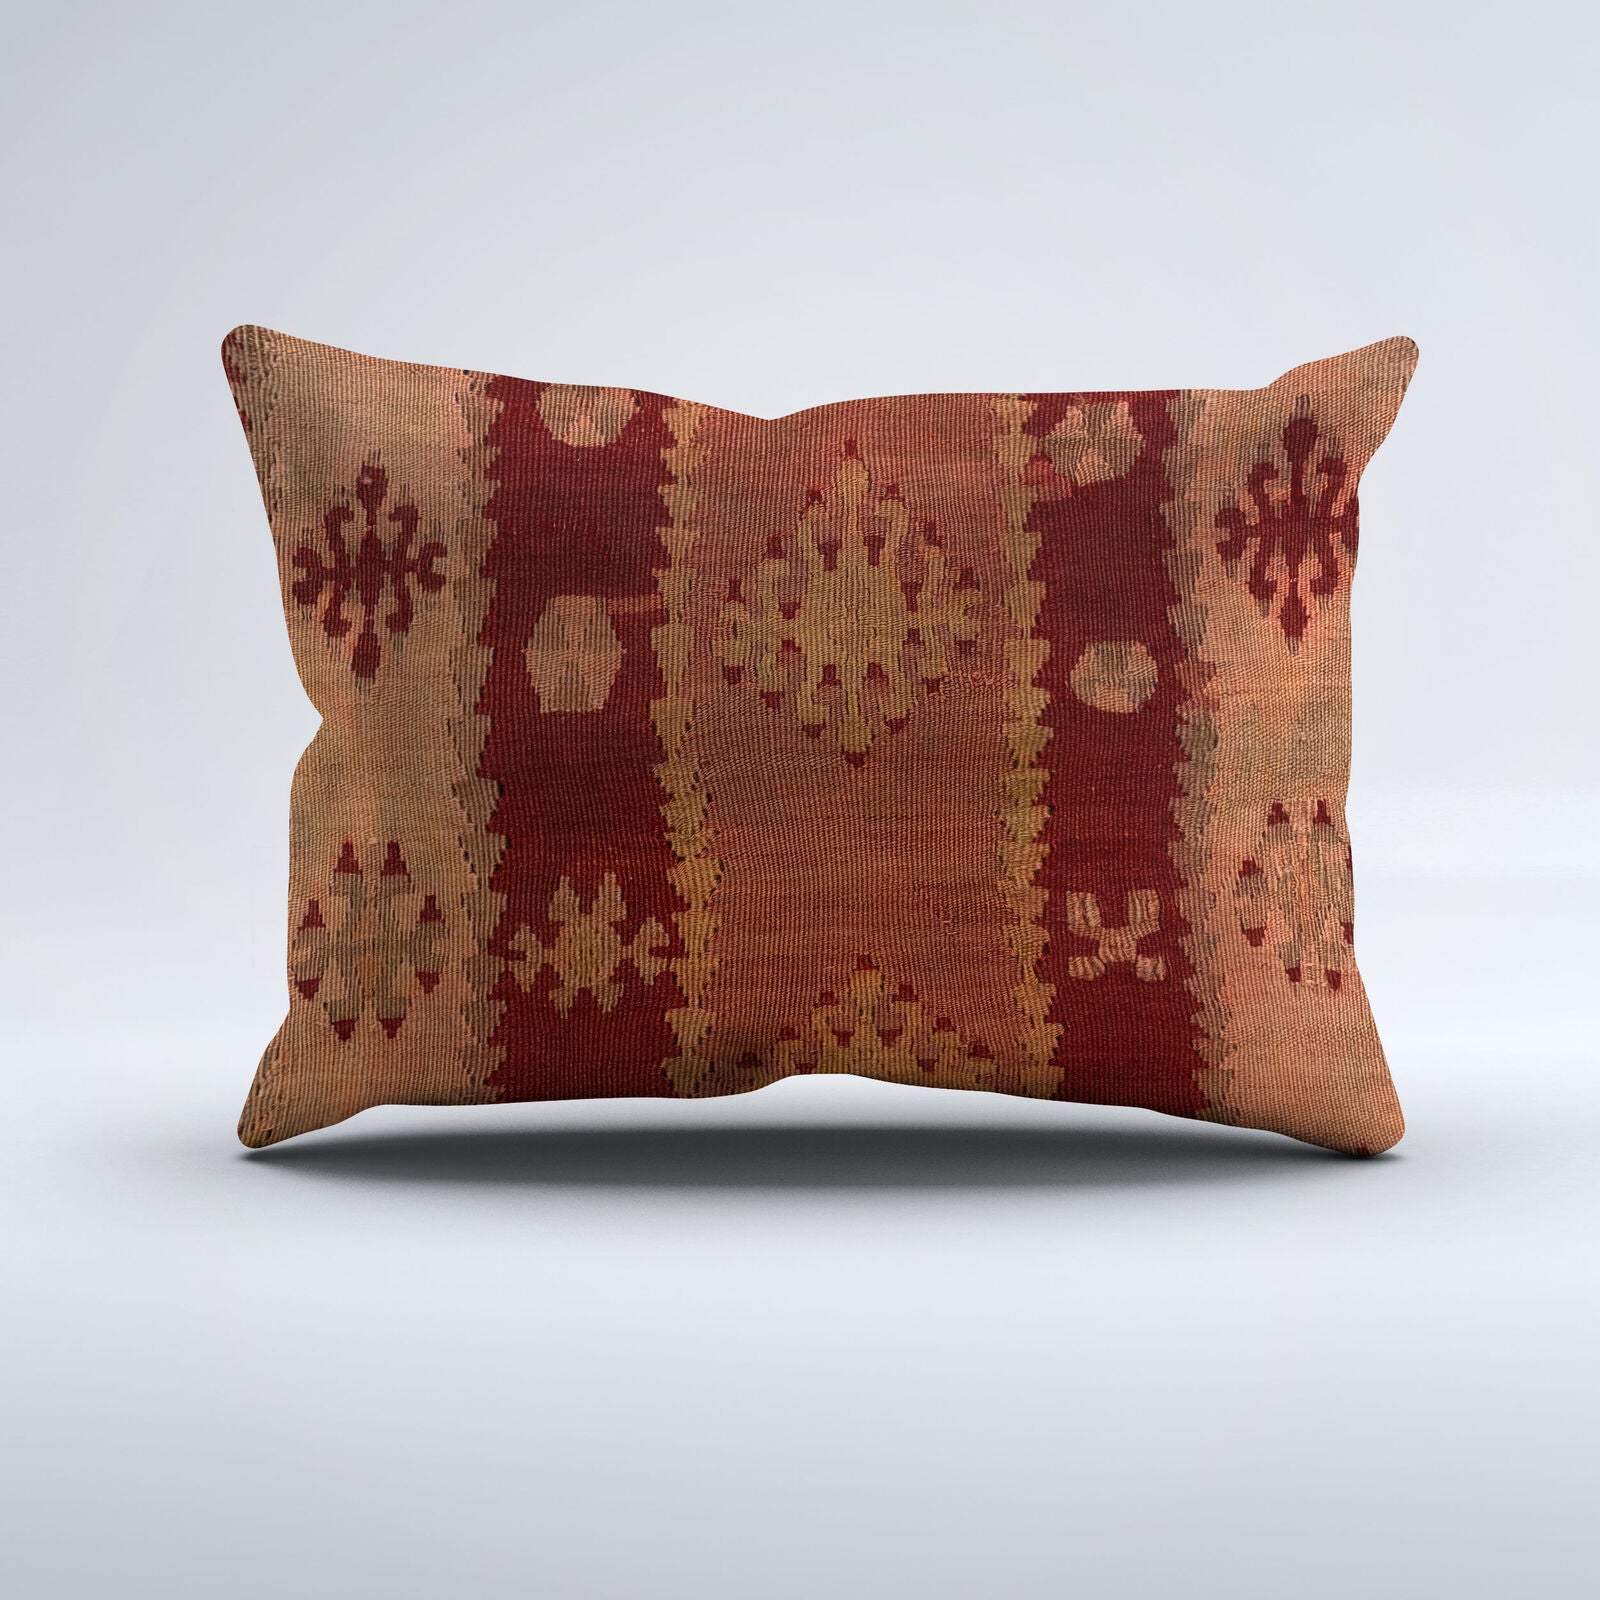 Vintage Turkish Kilim Cushion Cover 60x40 cm Square Wool Kelim Pillowcase 64709